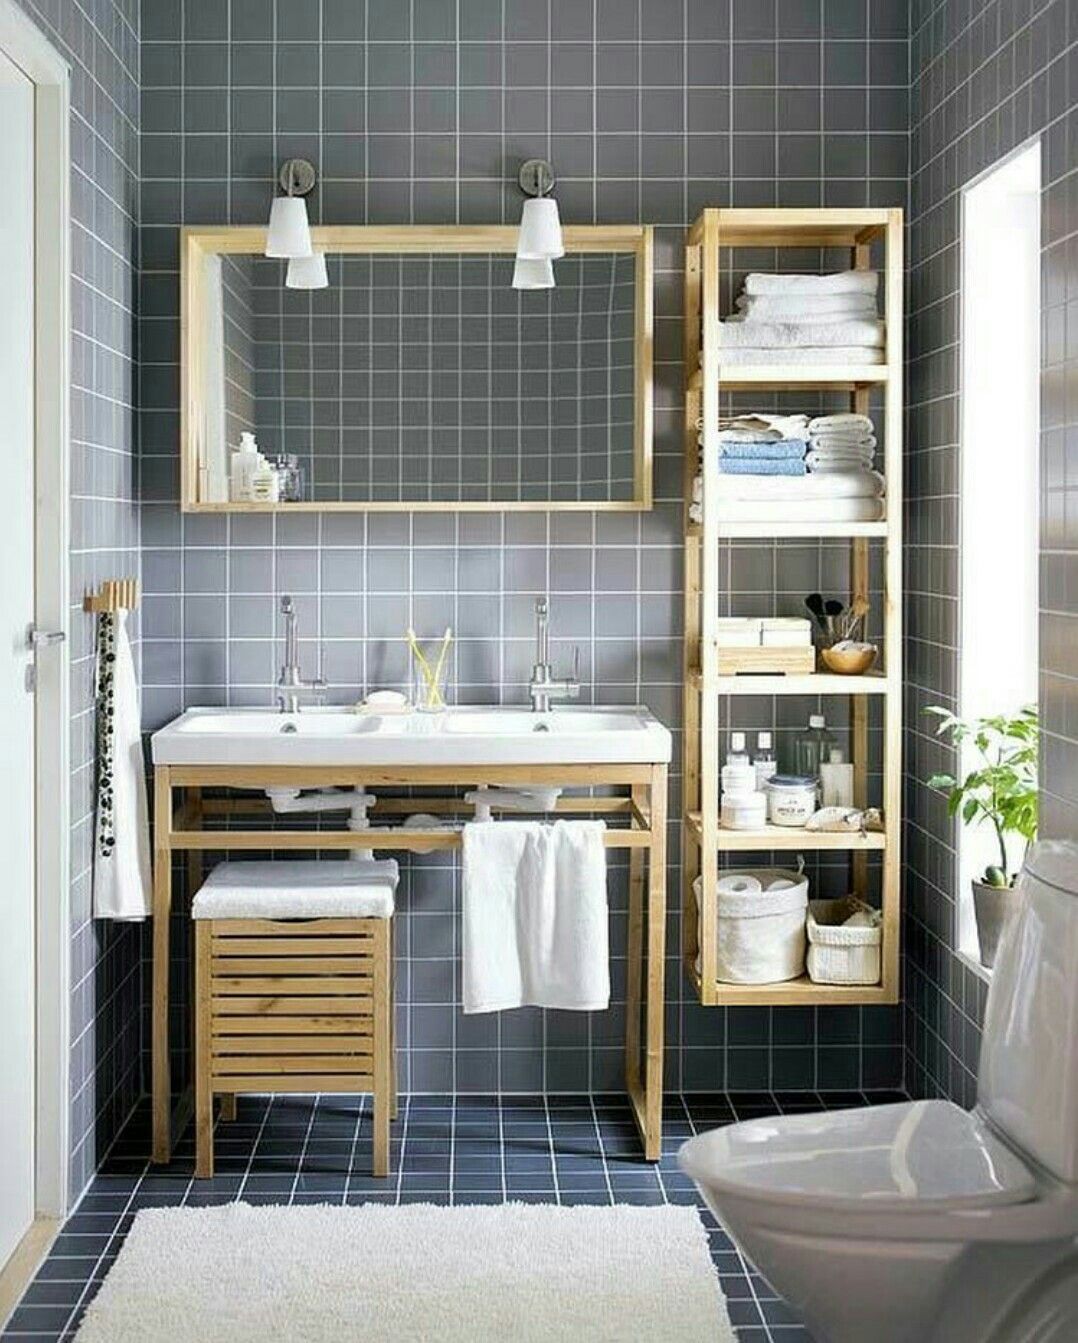 Create an Open Shelf in the Bathroom Interior